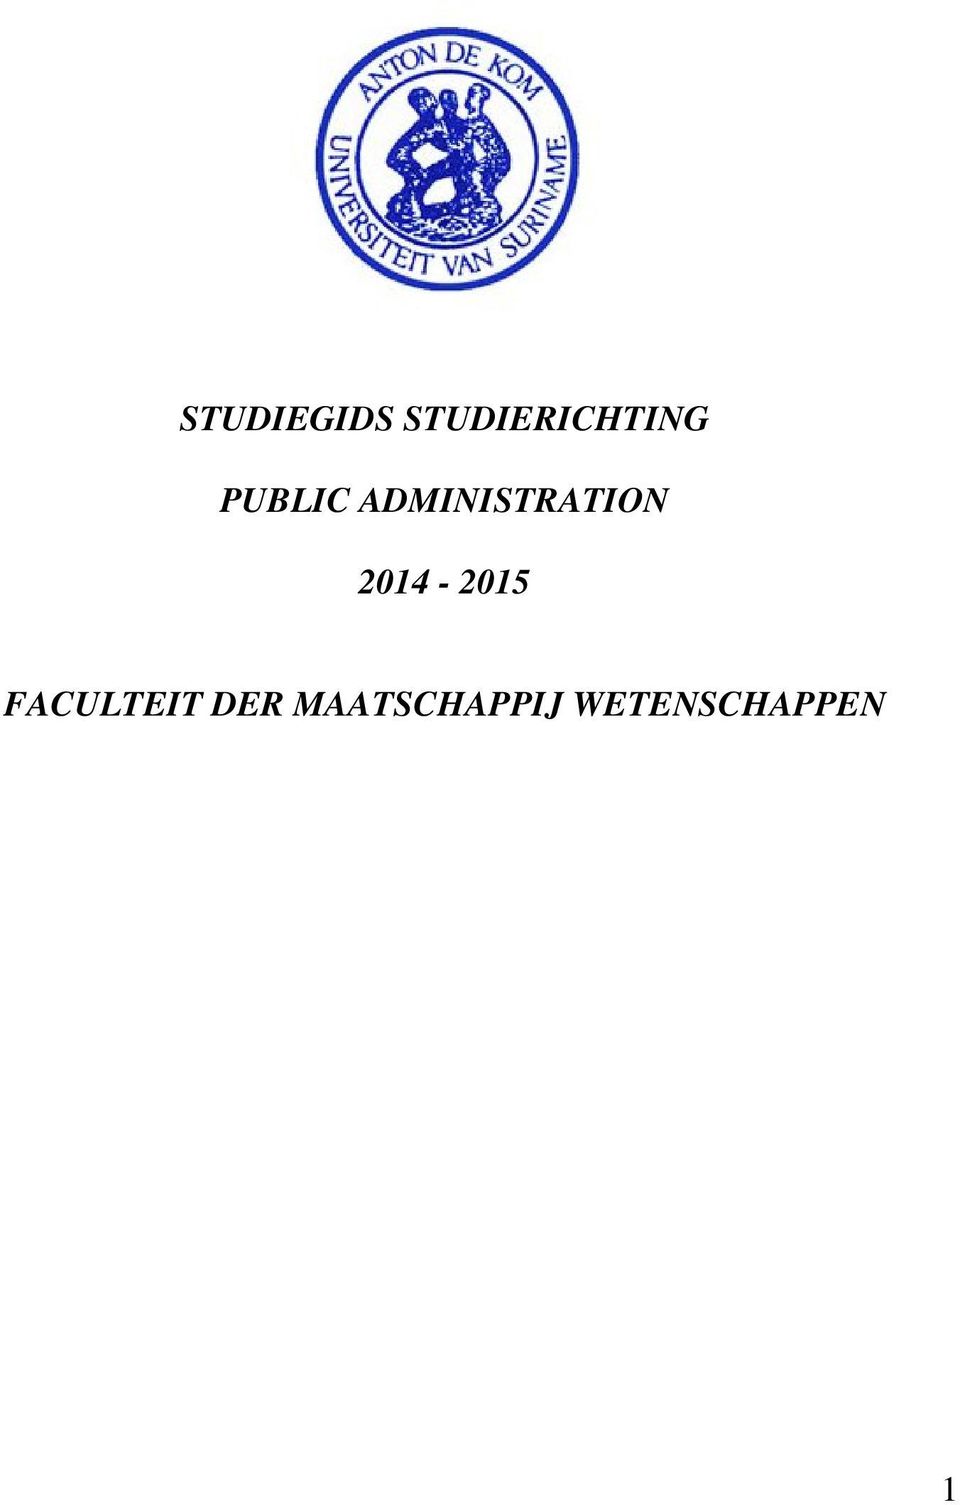 ADMINISTRATION 2014-2015